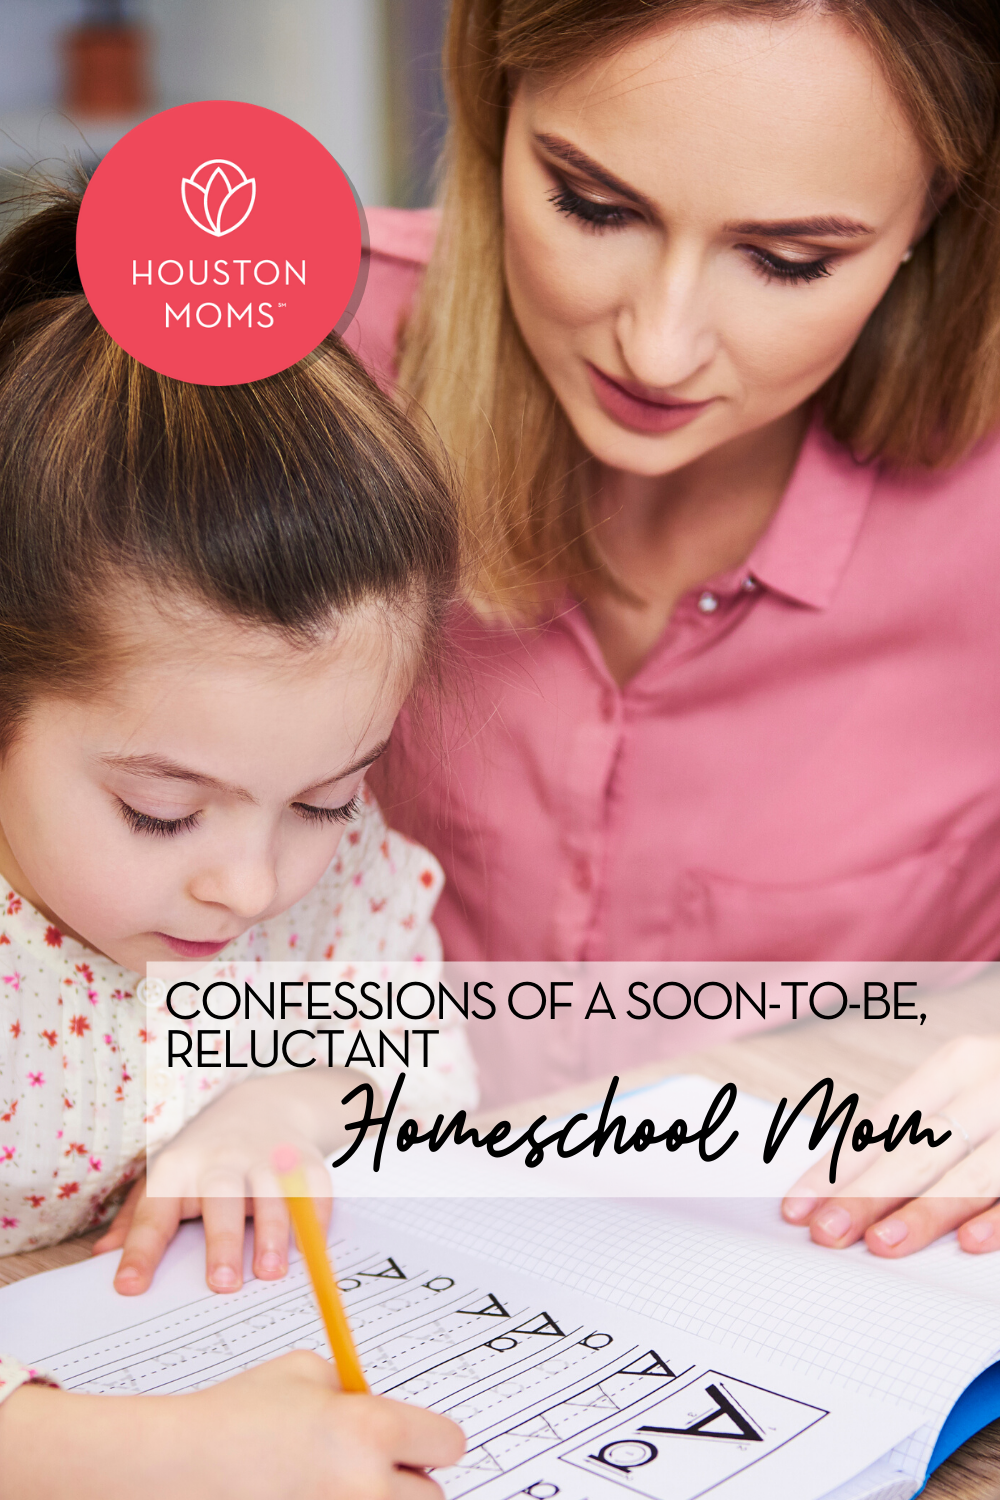 Houston Moms "Confessions of a Soon-to-be Reluctant Homeschool Mom" #houstonmoms #houstonmomsblog #momsaroundhouston